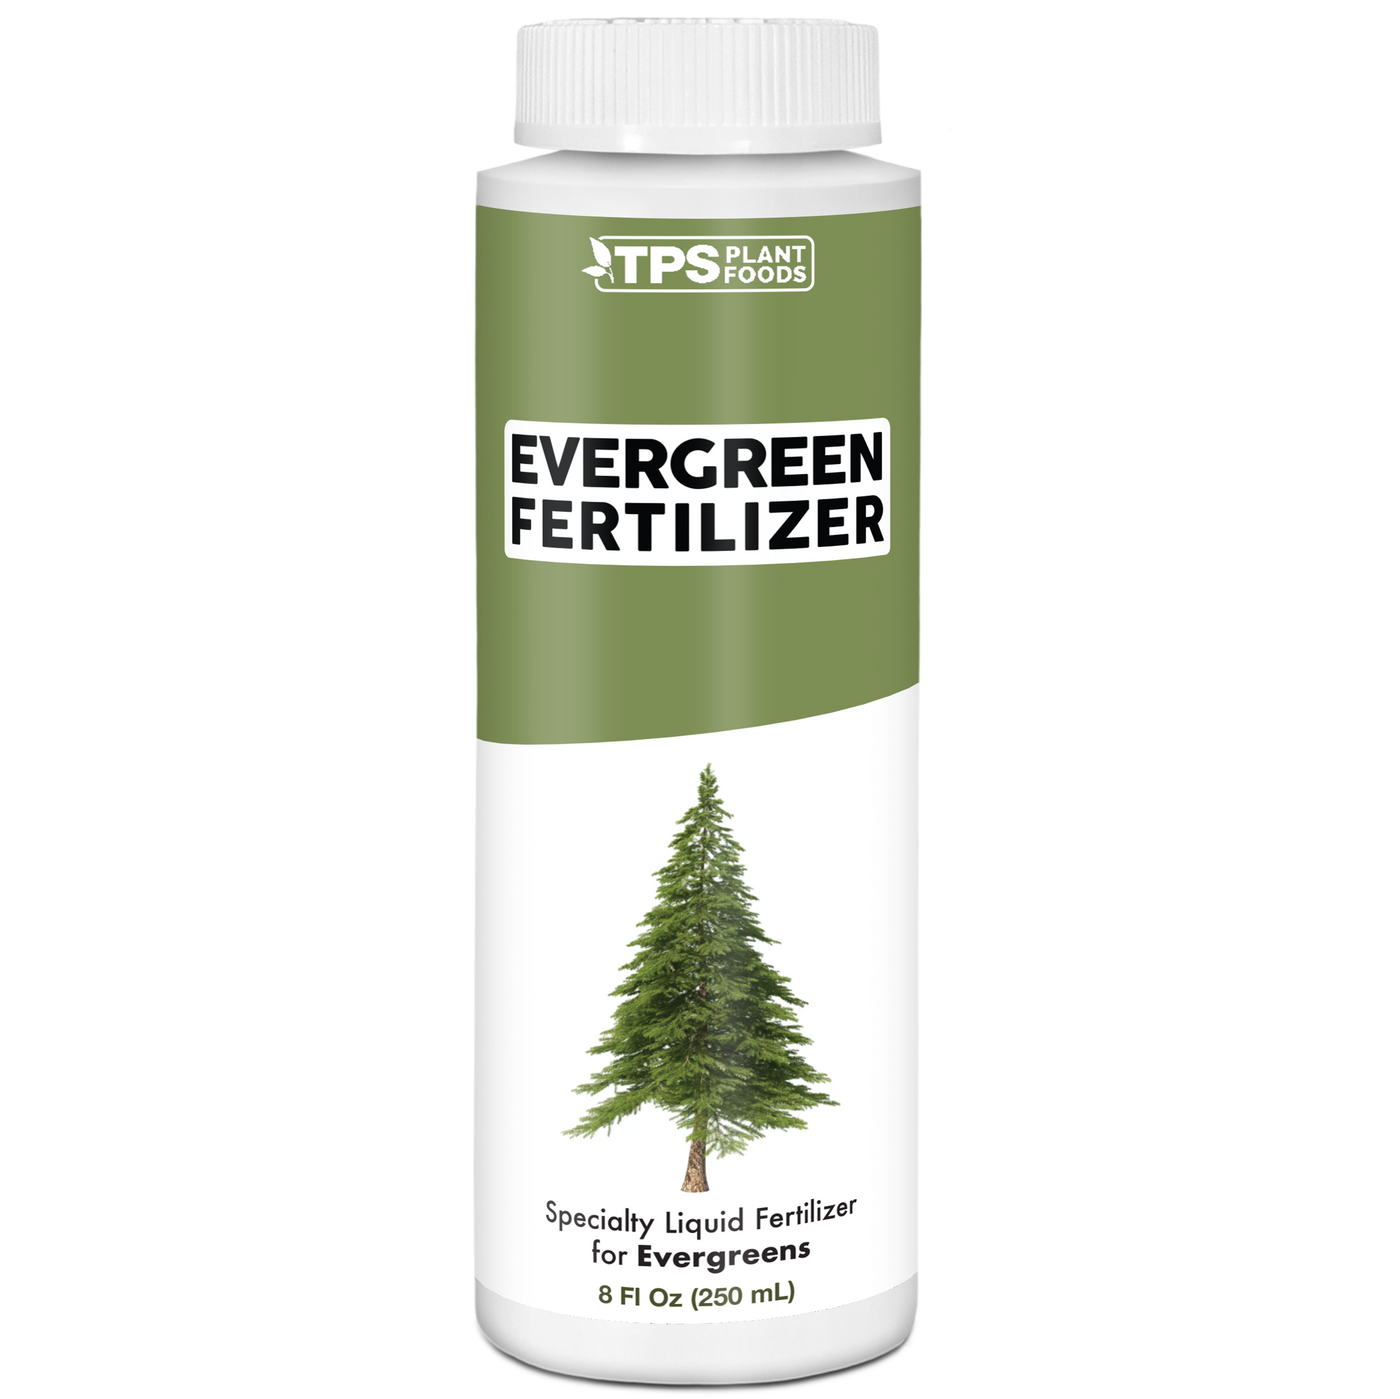 Evergreen Fertilizer